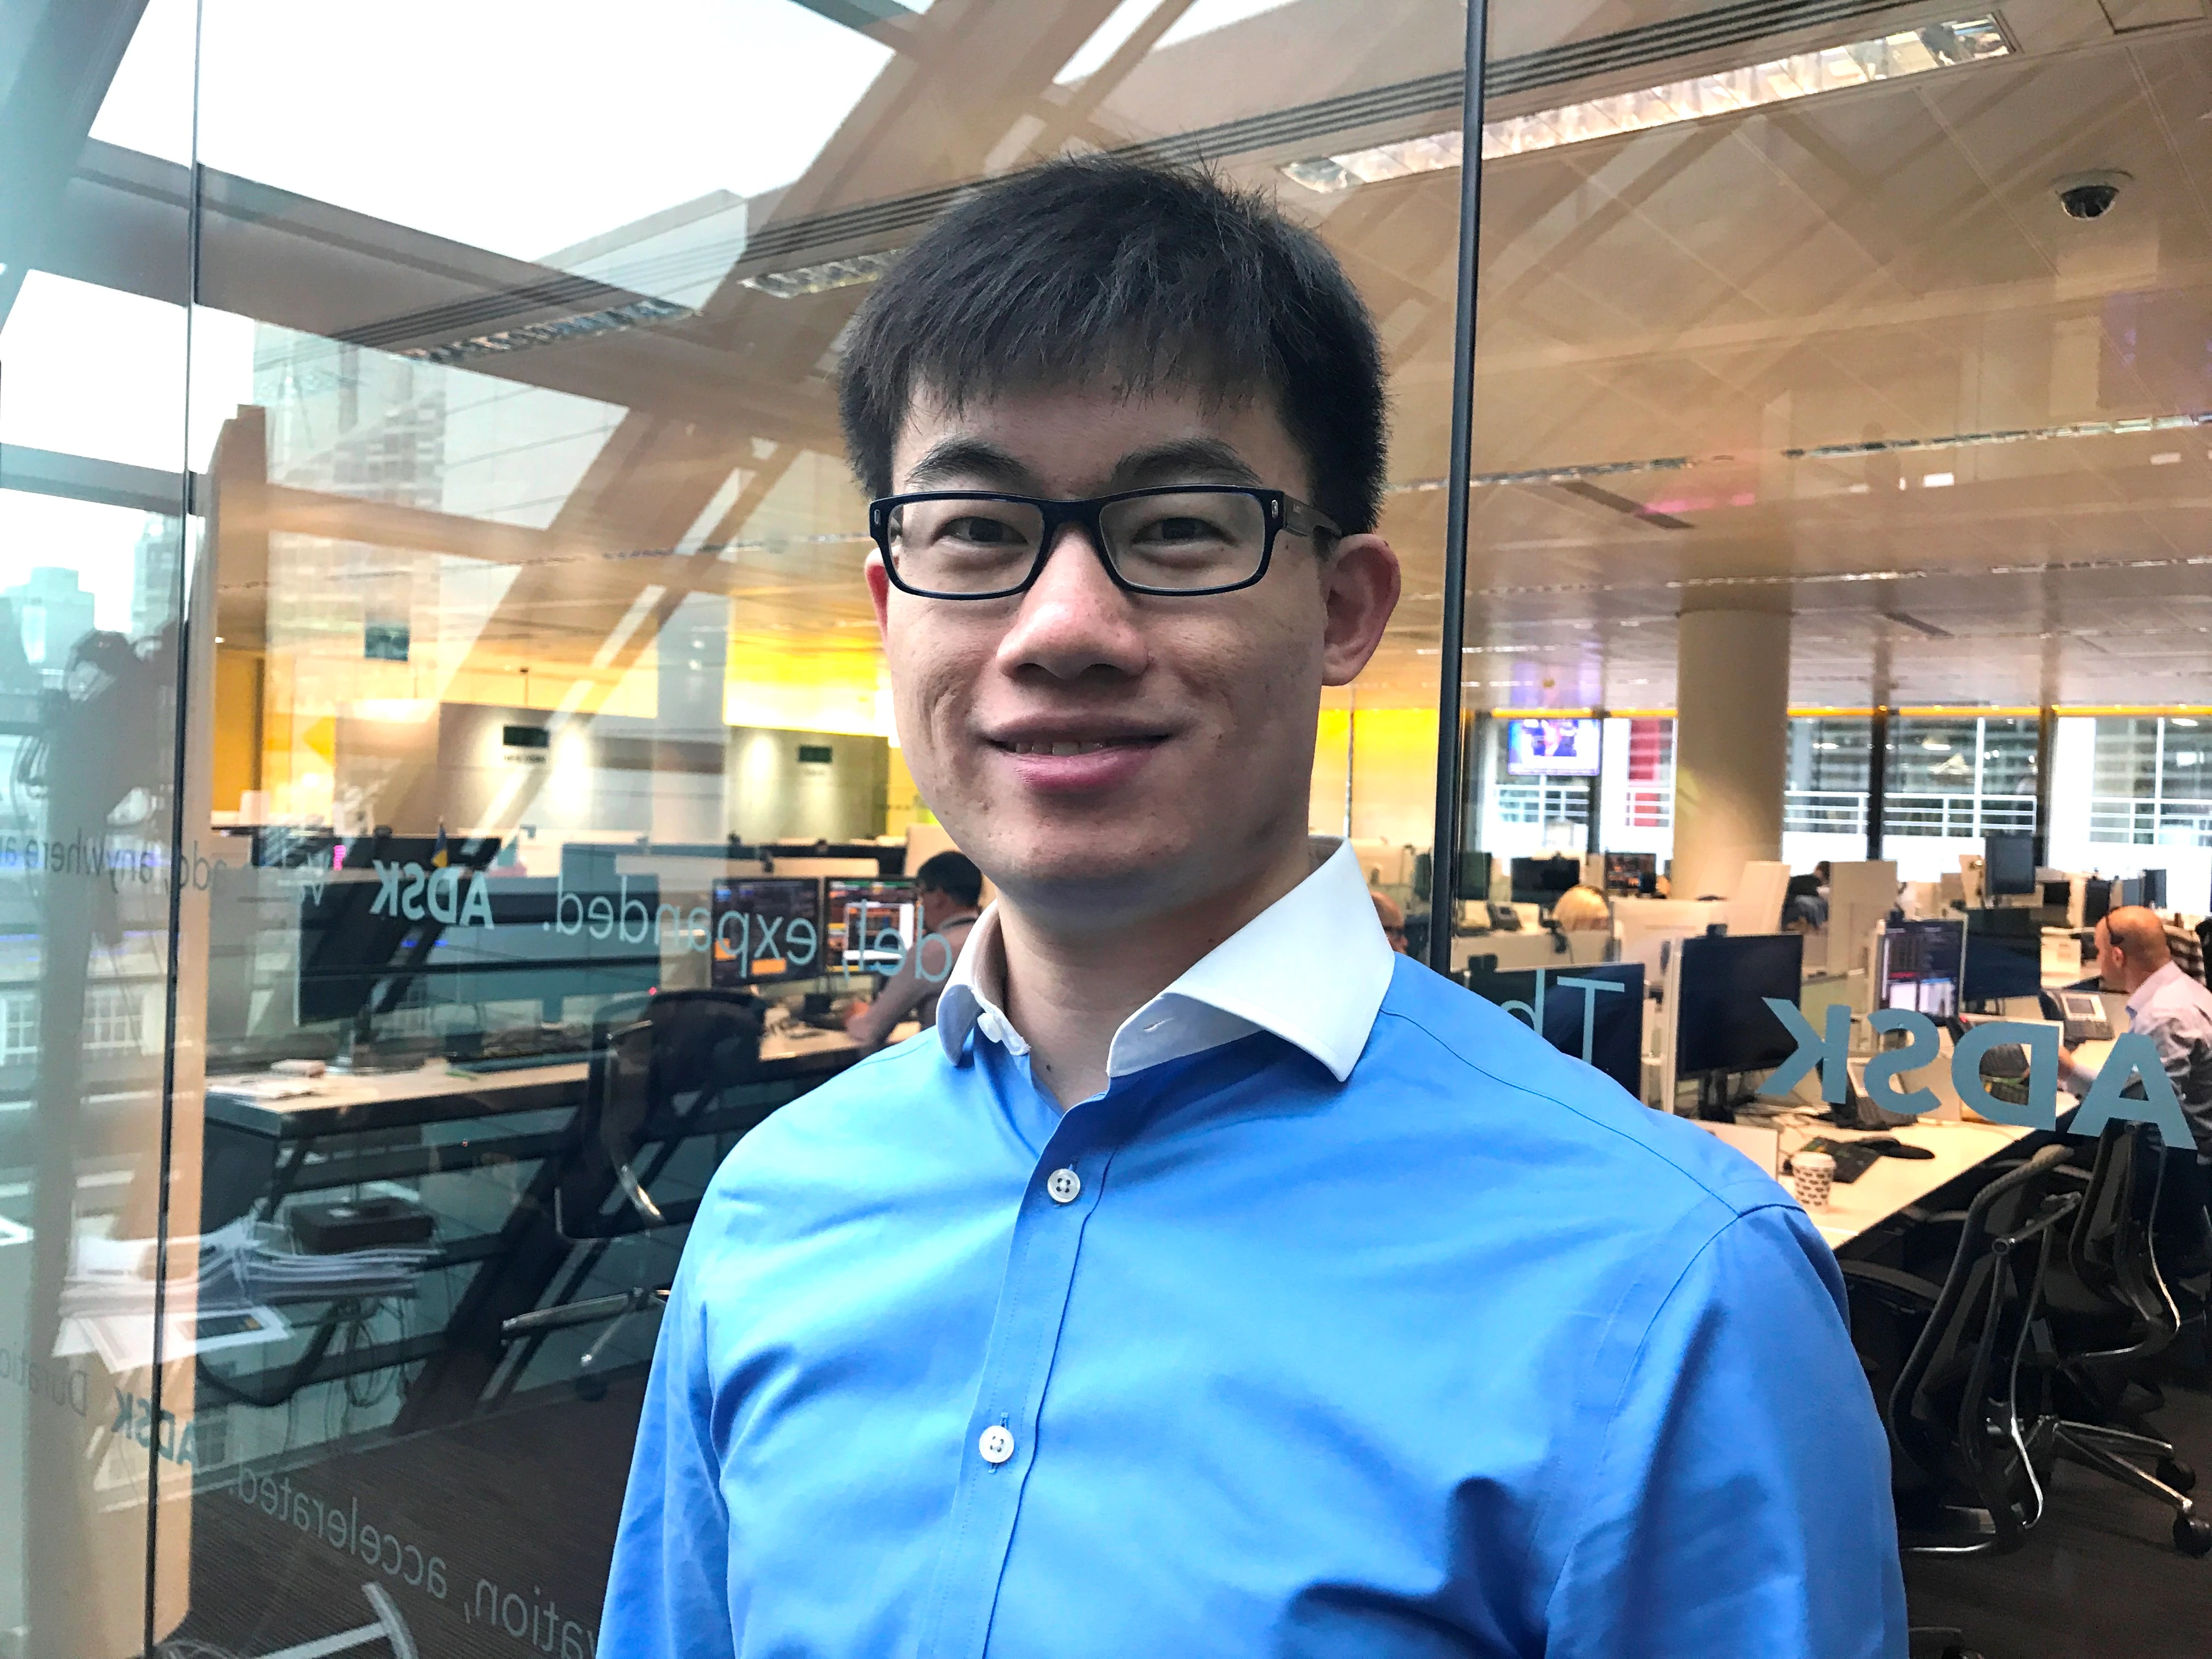 Senior AI researcher and engineer Minjie Xu